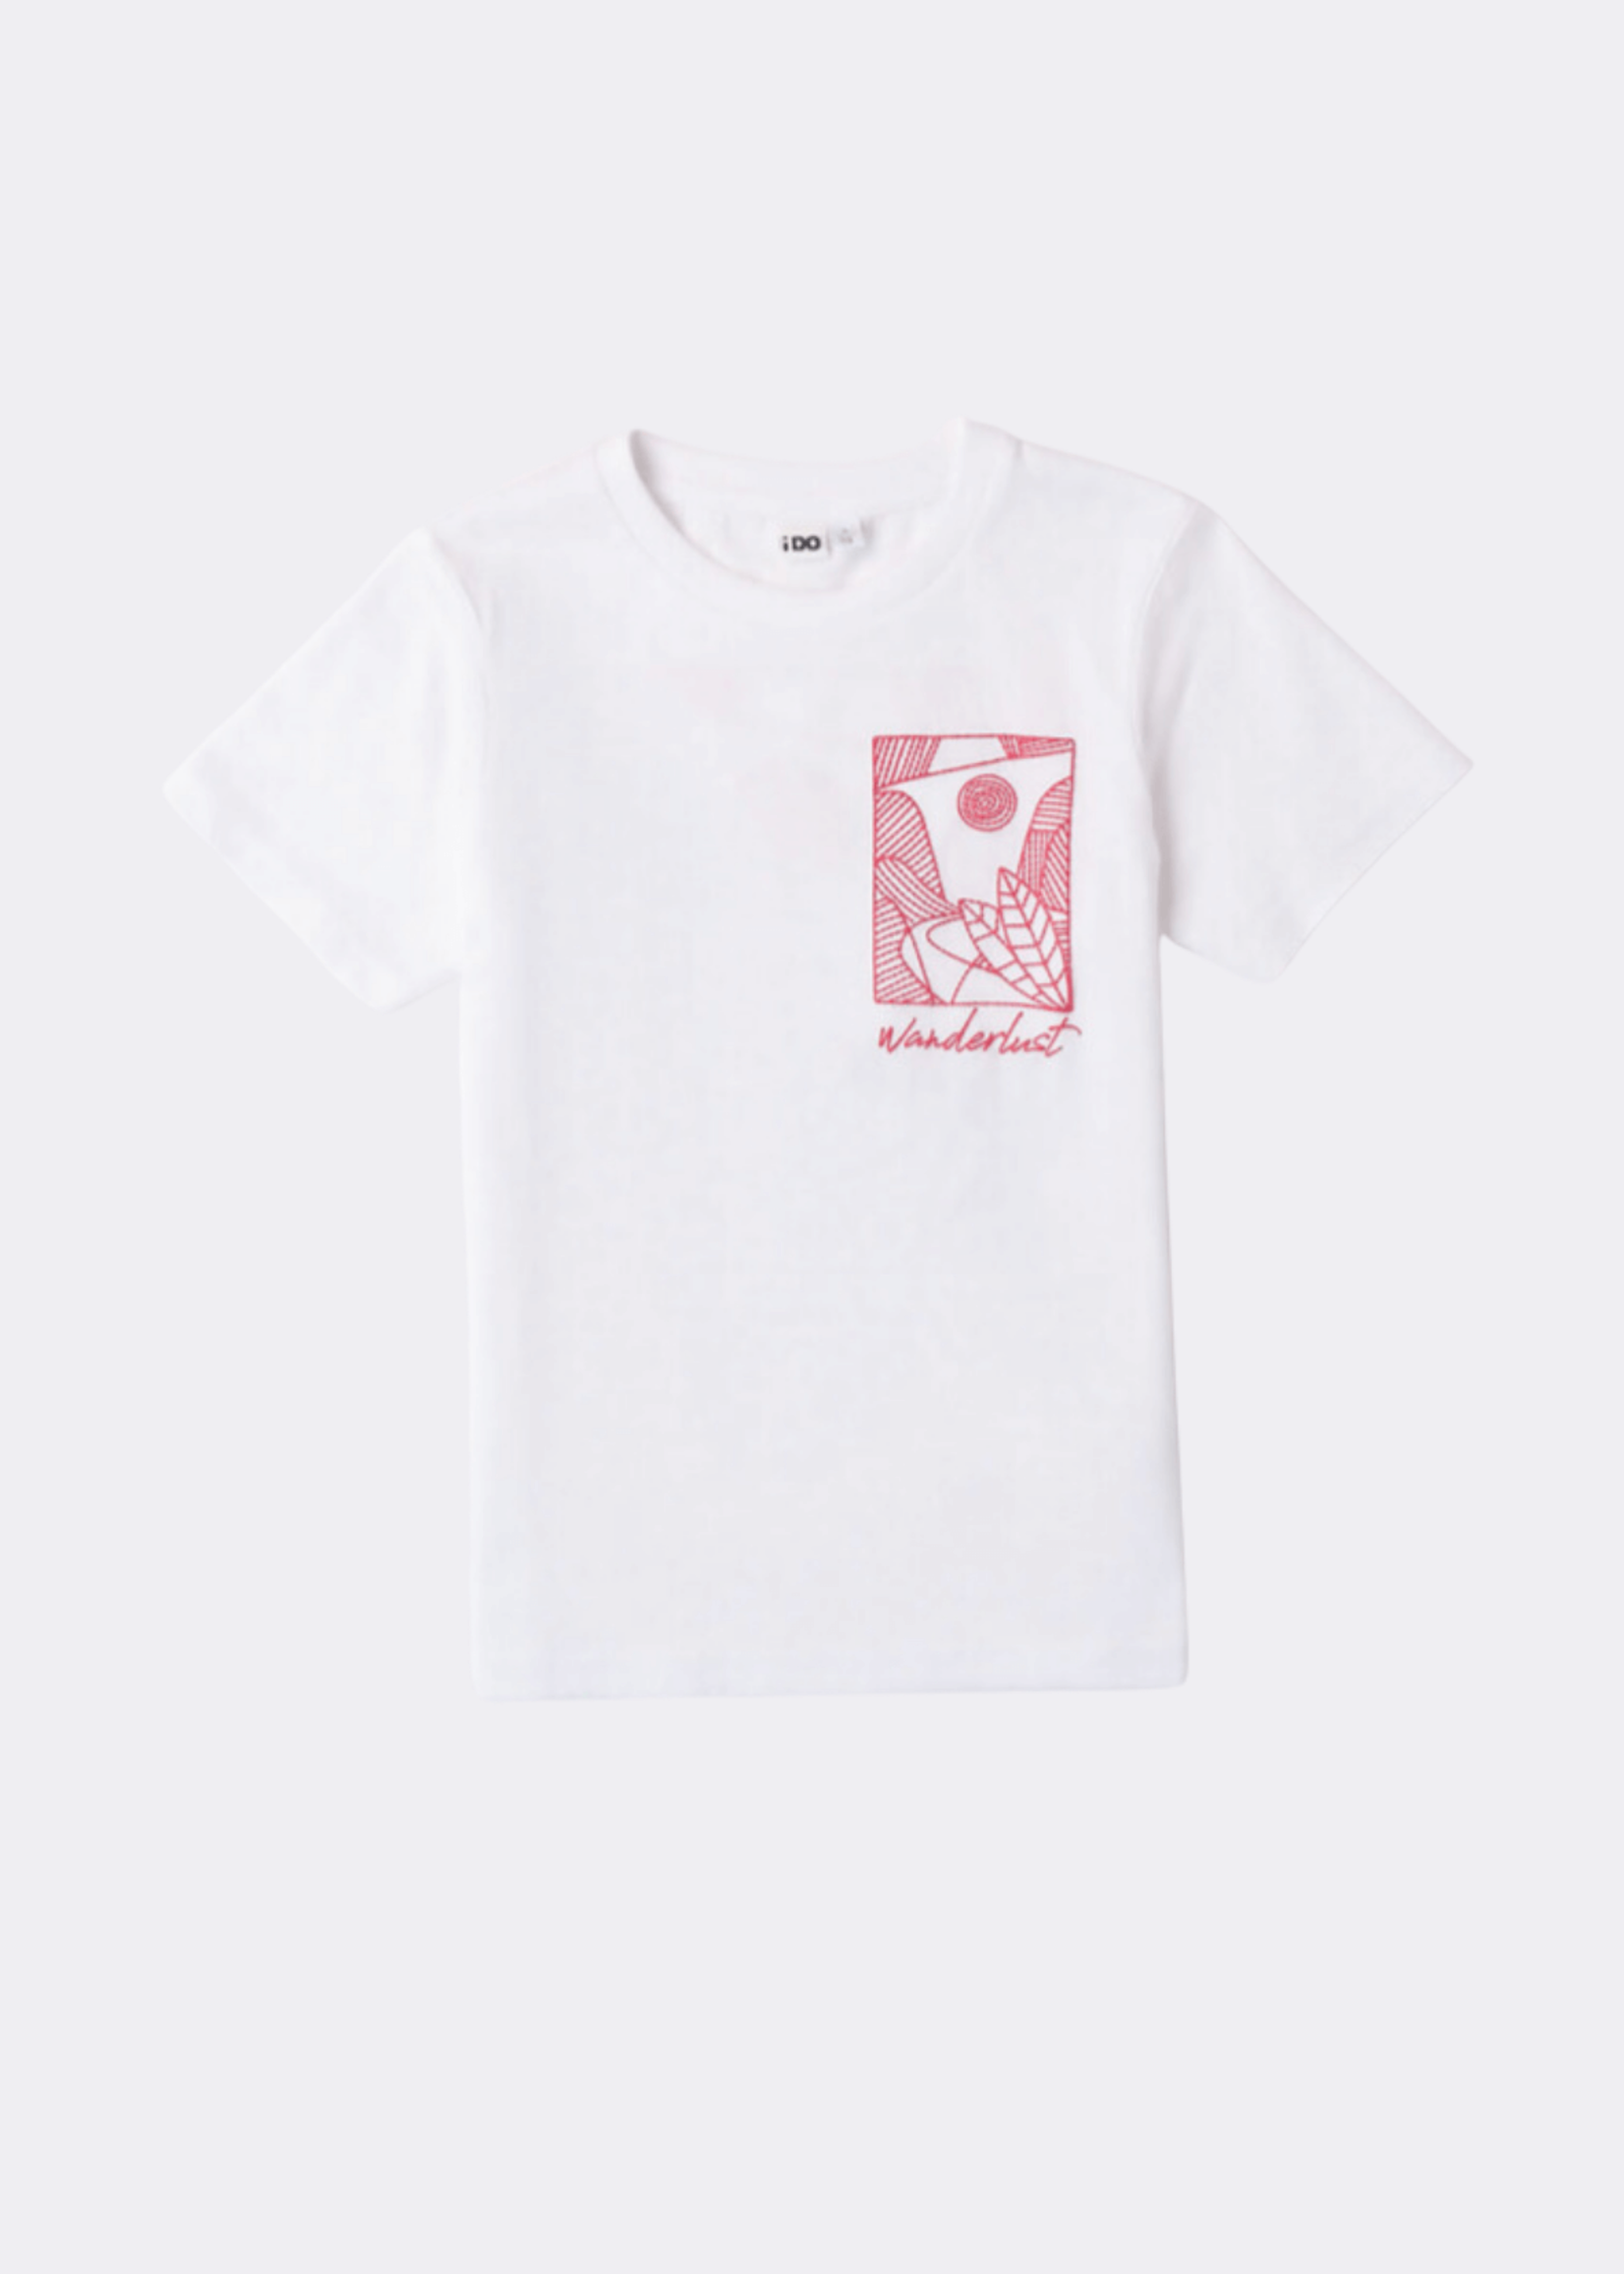 iDO White T-shirt Red Print